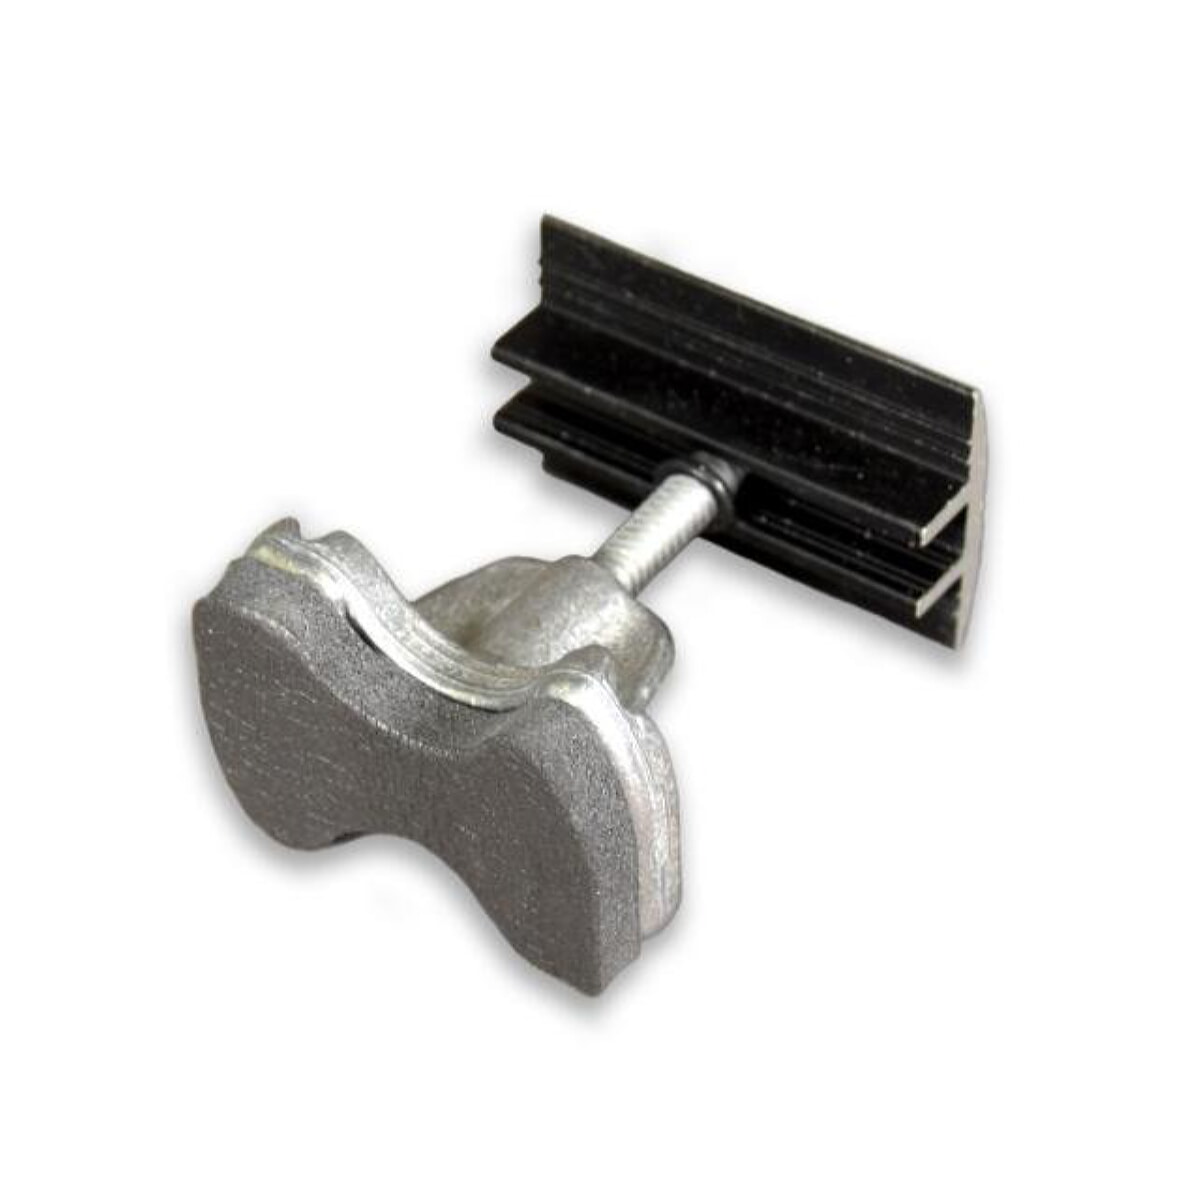 Novotegra middle clamp 30-42 set C aluminum black